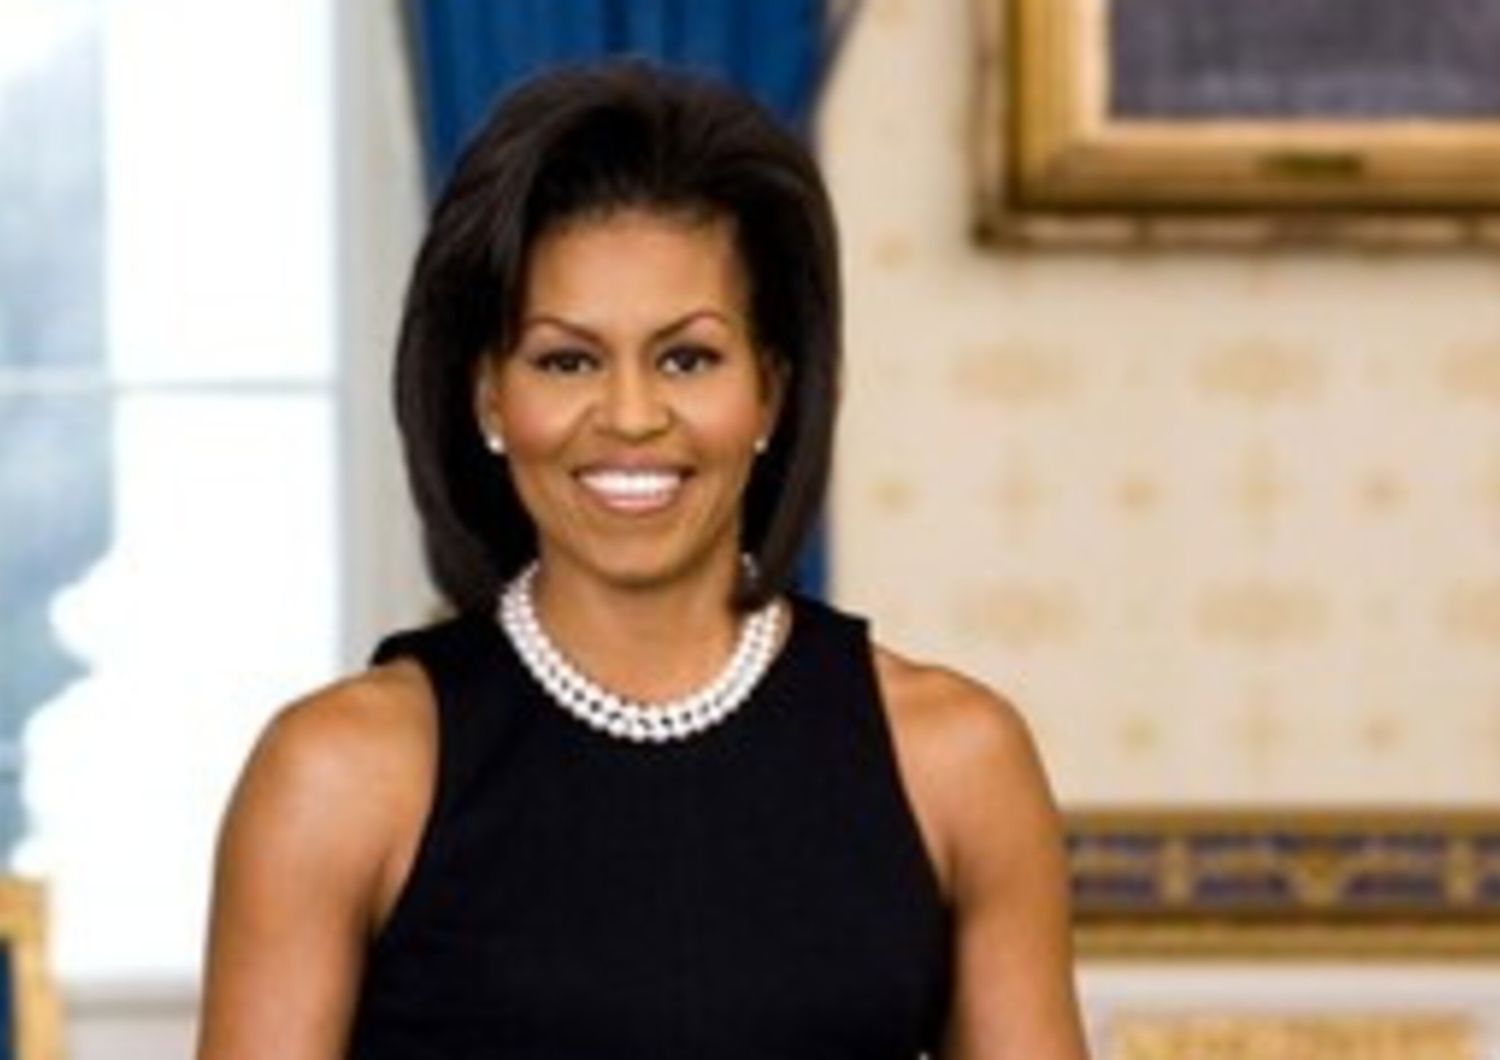 Michelle Obama (Joyce N. Boghosian/Official White House Photo)